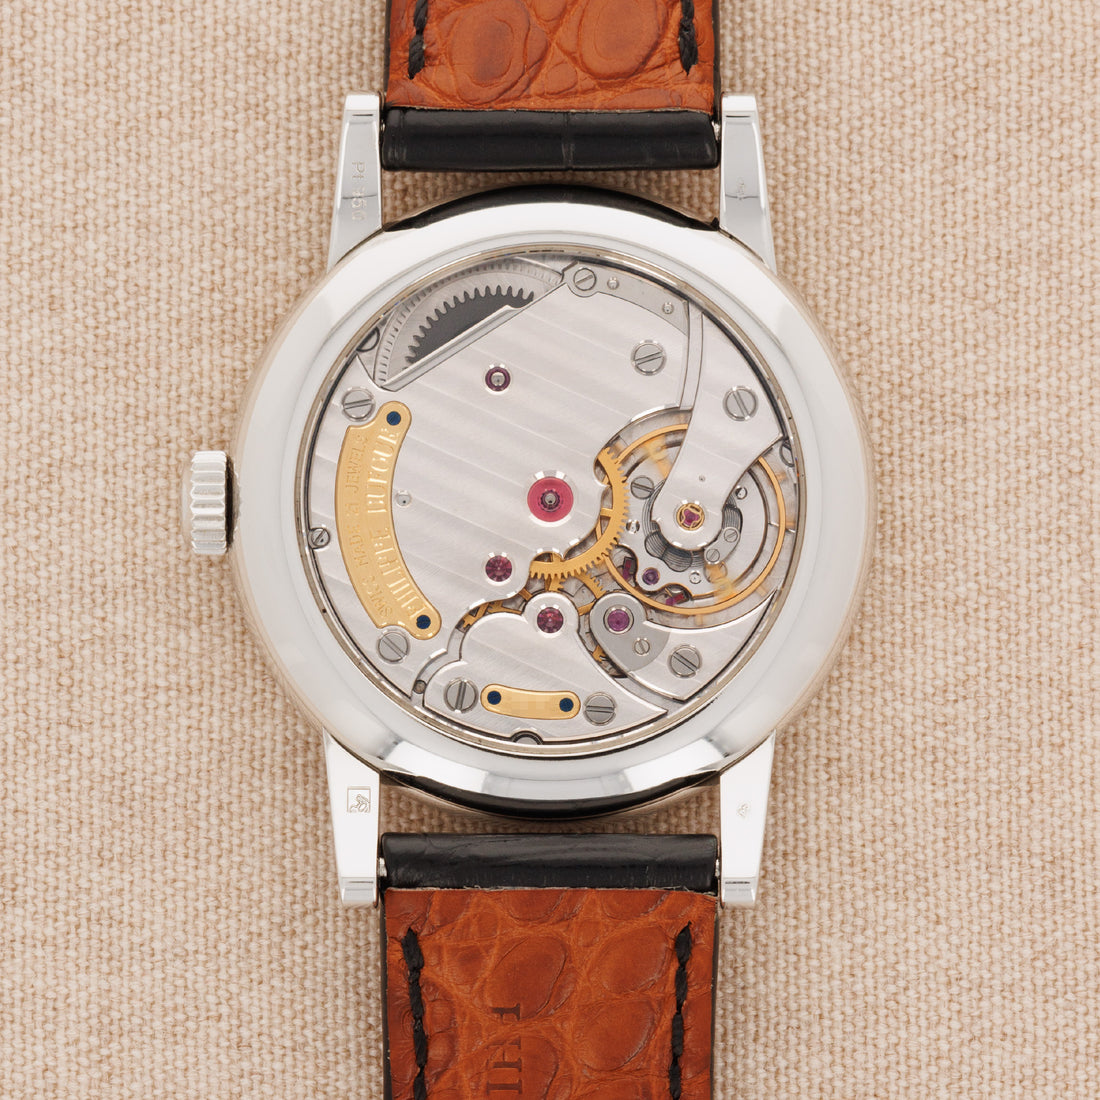 Philippe Dufour Platinum Simplicity Watch